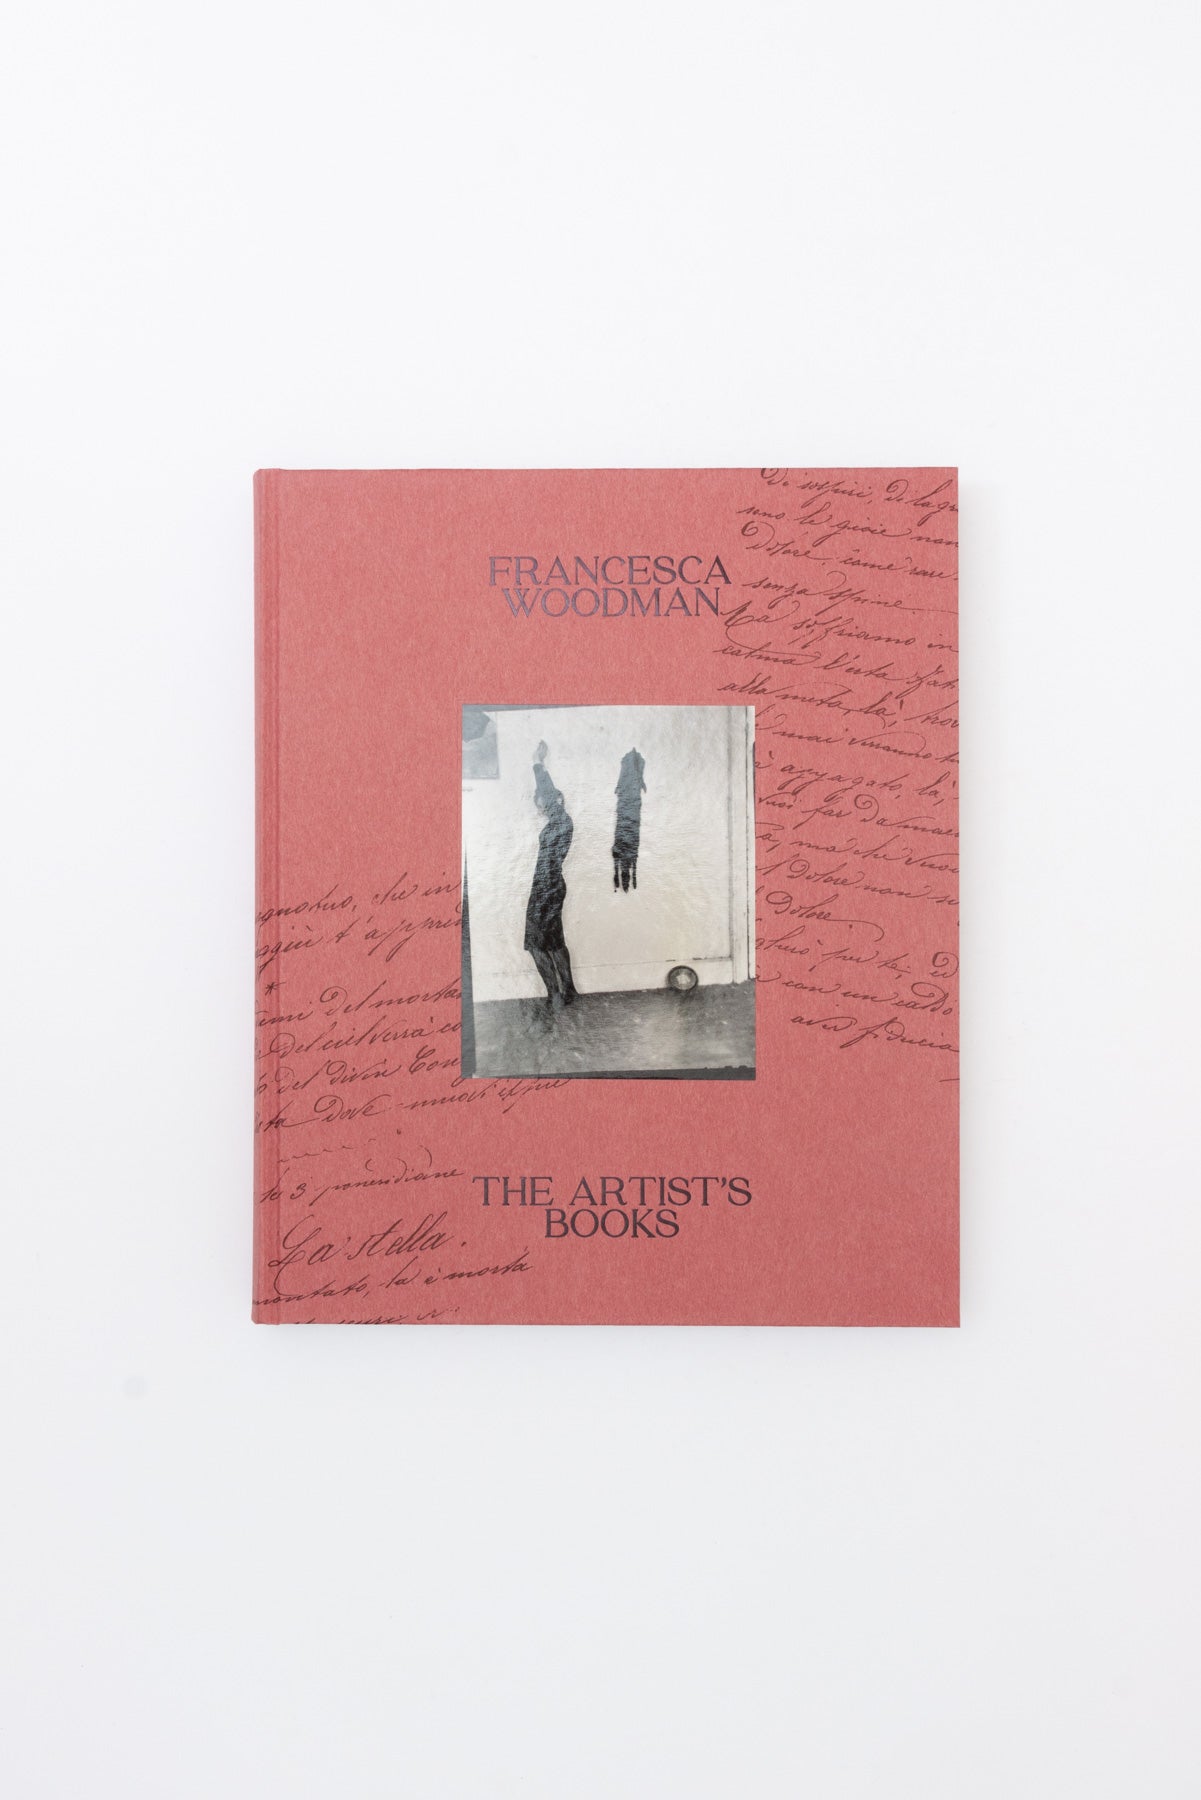 The Artist's Books - Francesca Woodman